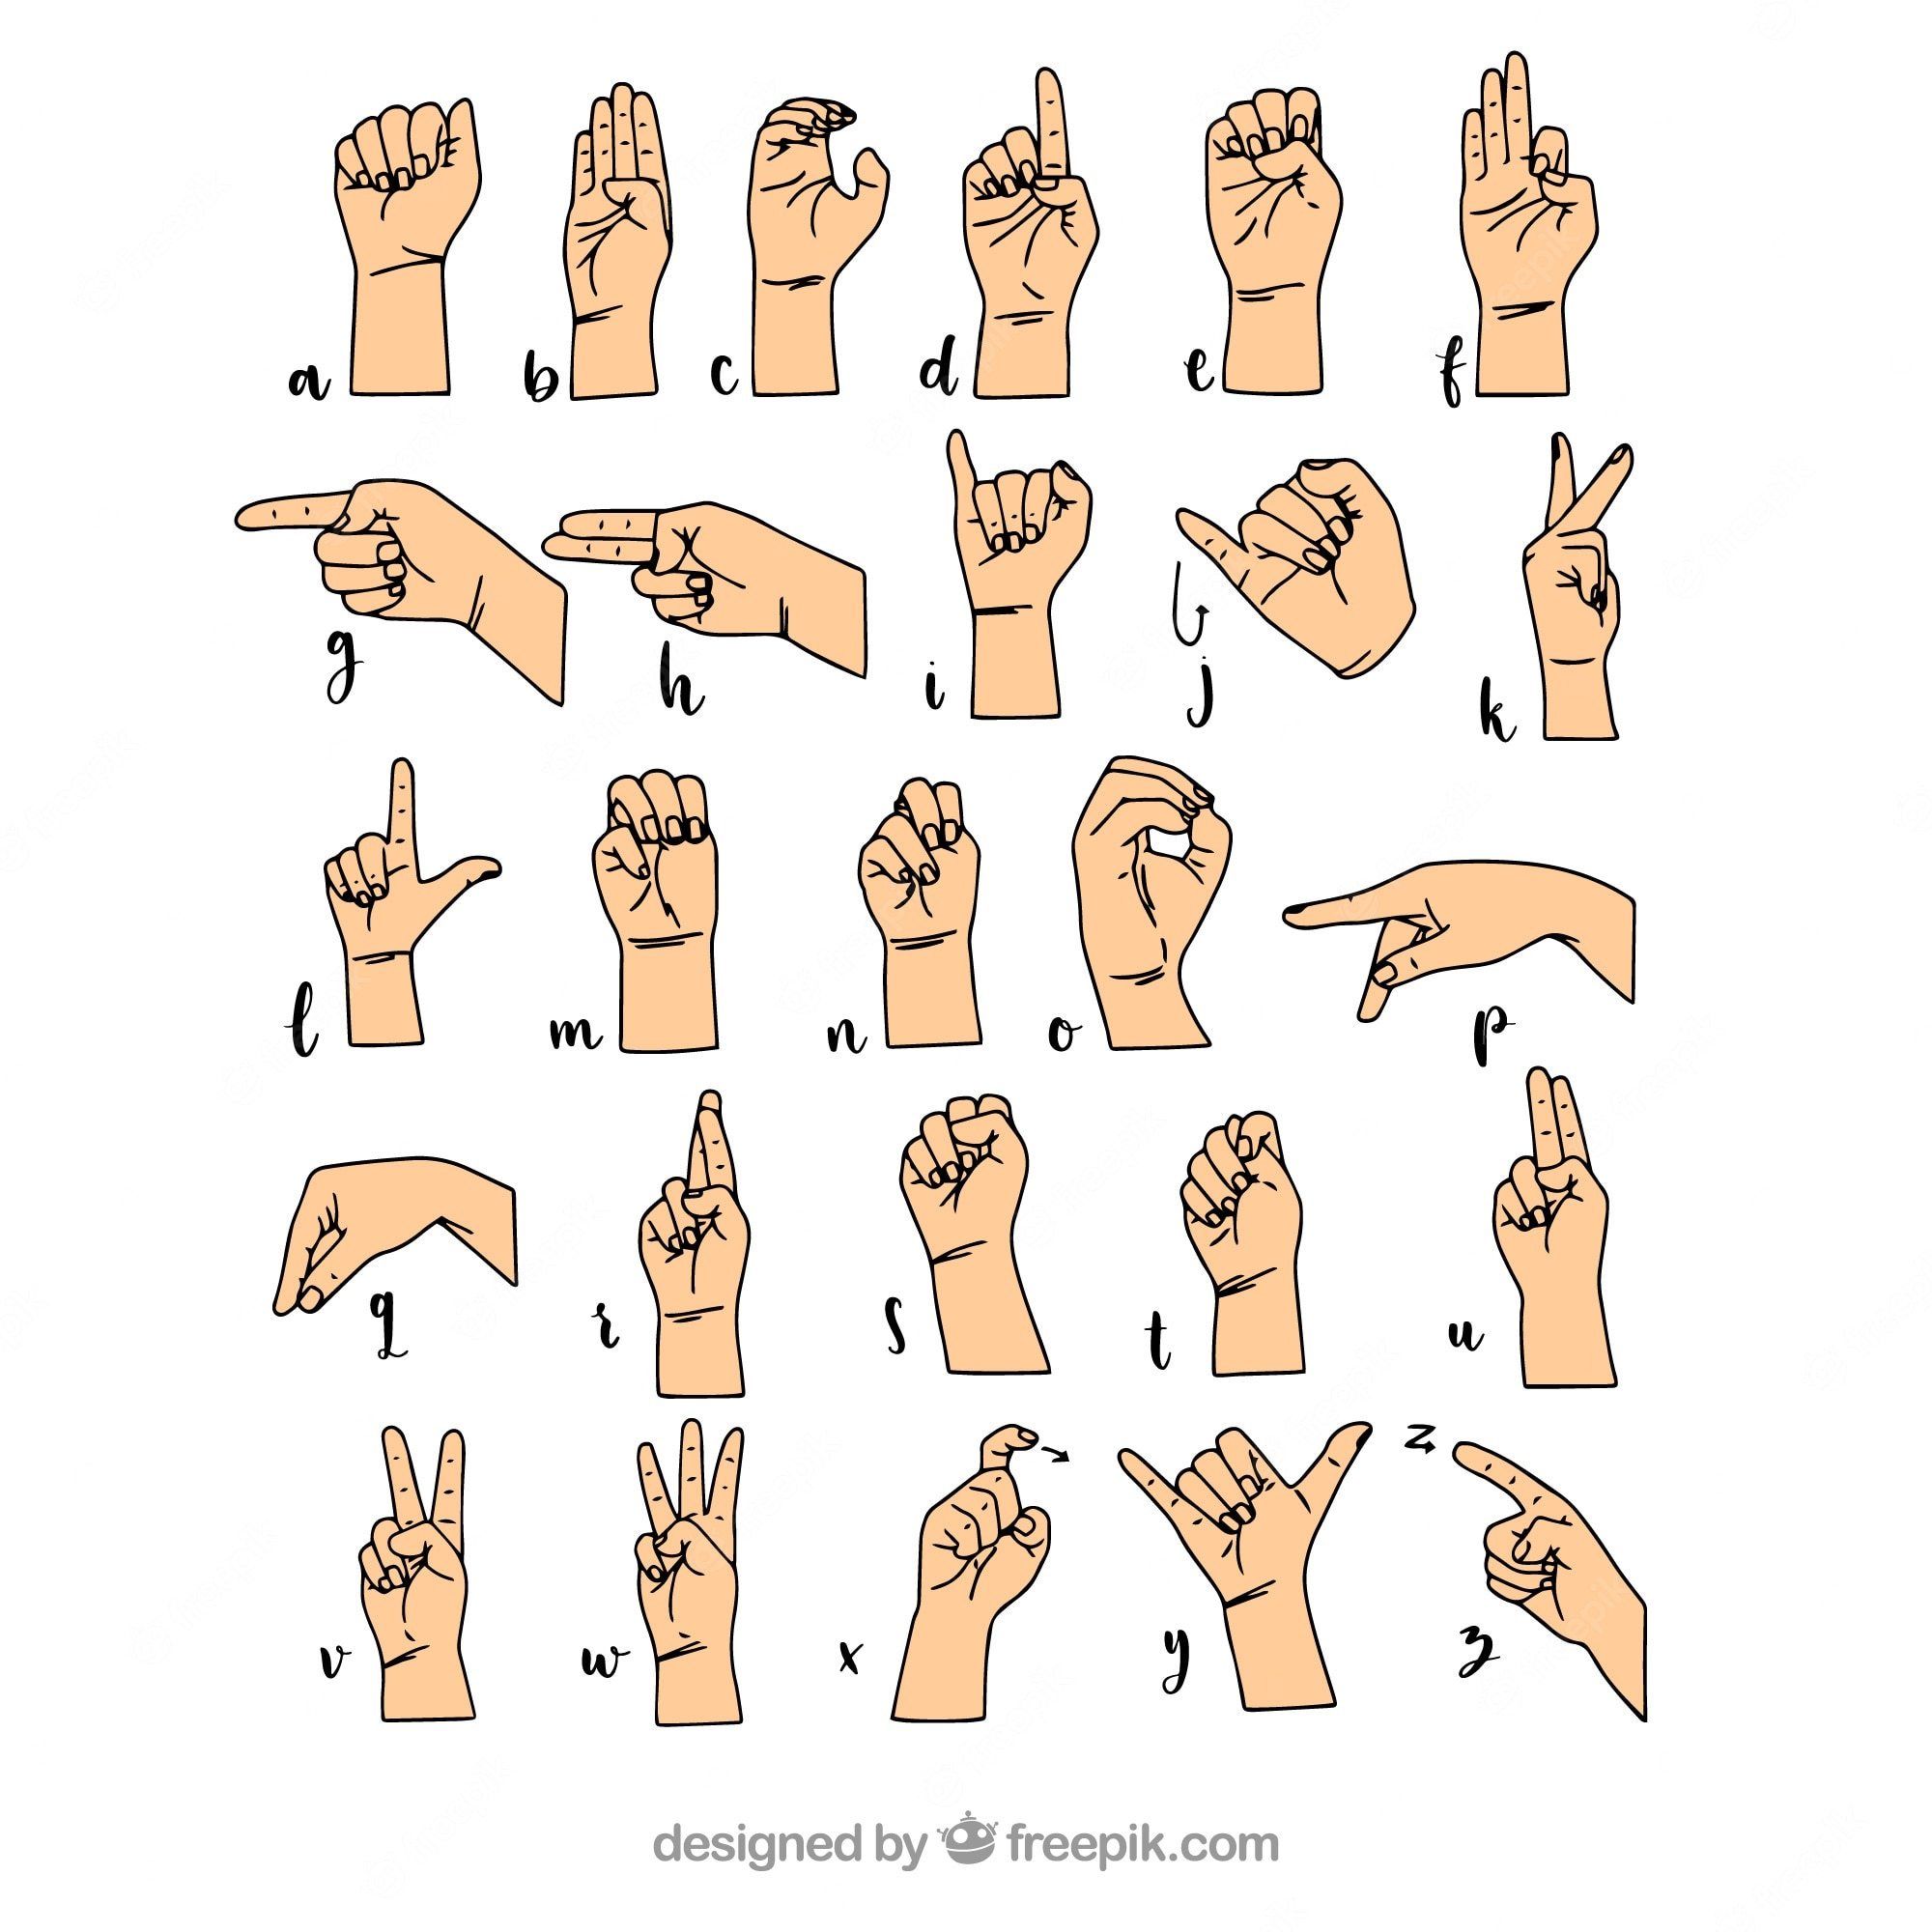 BSL (British Sign Language) - Year 7 - Quizizz